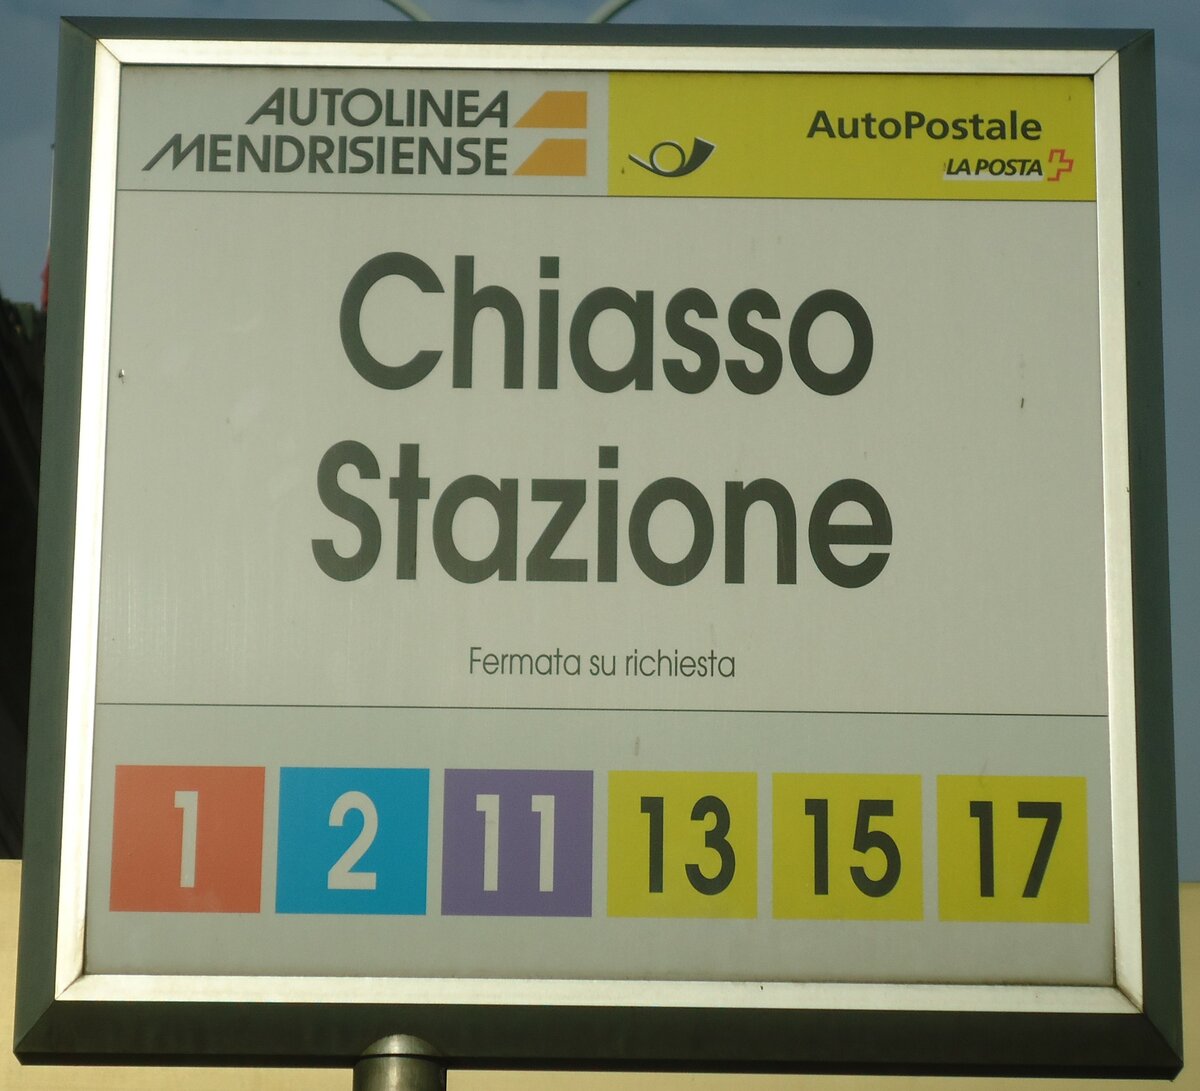 (147'778) - AUTOLINEA MENDRISIENSE/PostAuto-Haltestellenschild - Chiasso, Stazione - am 6. November 2013